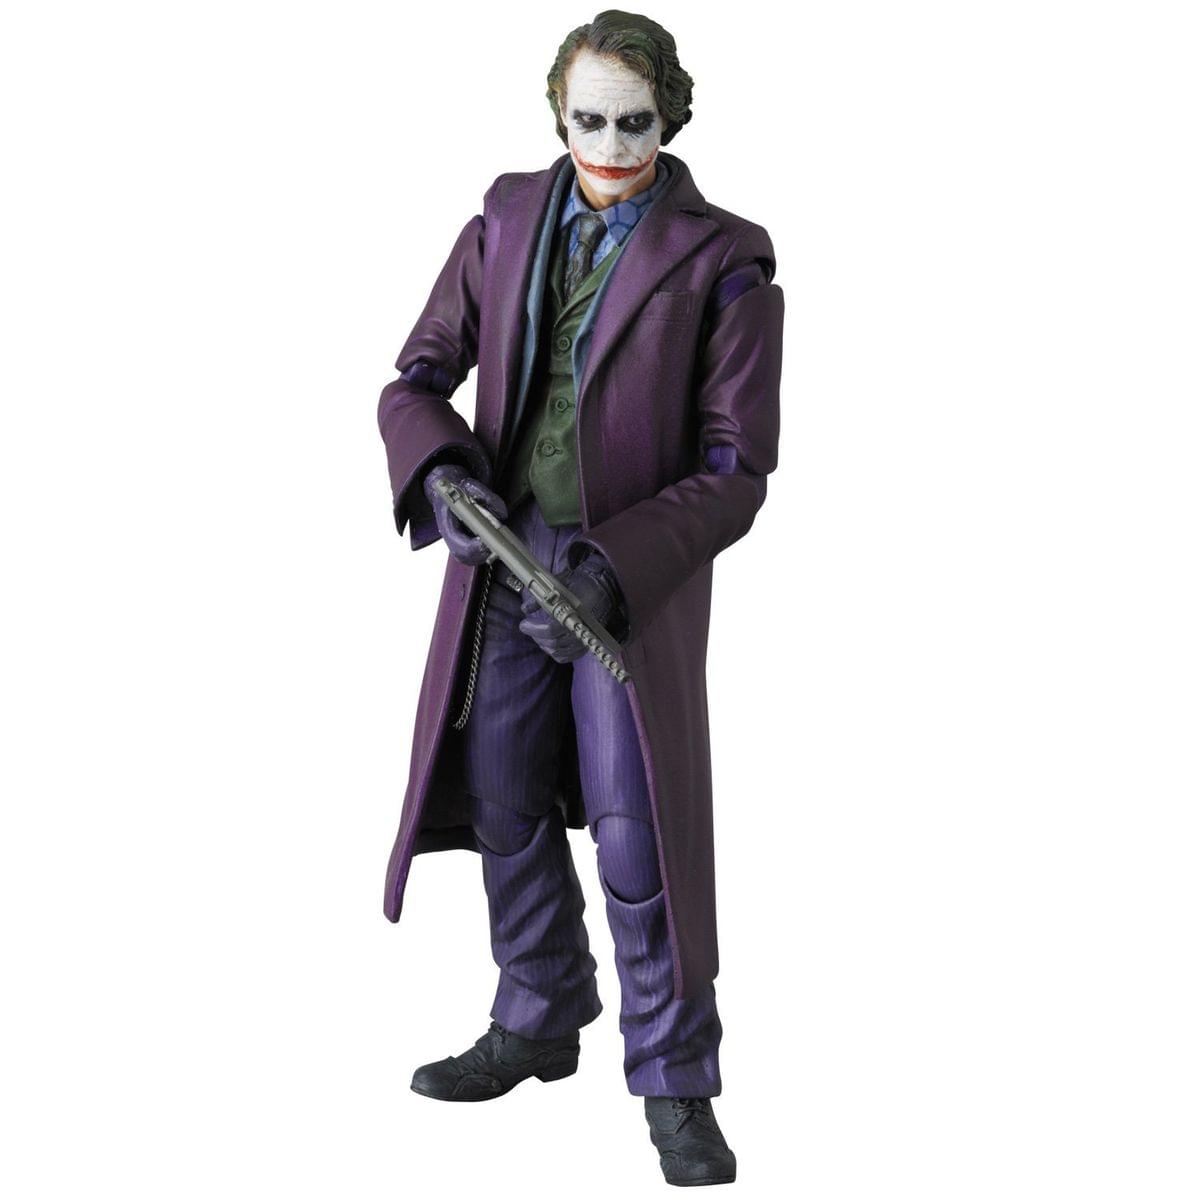 Batman The Dark Knight MAFEX 6" Action Figure: The Joker